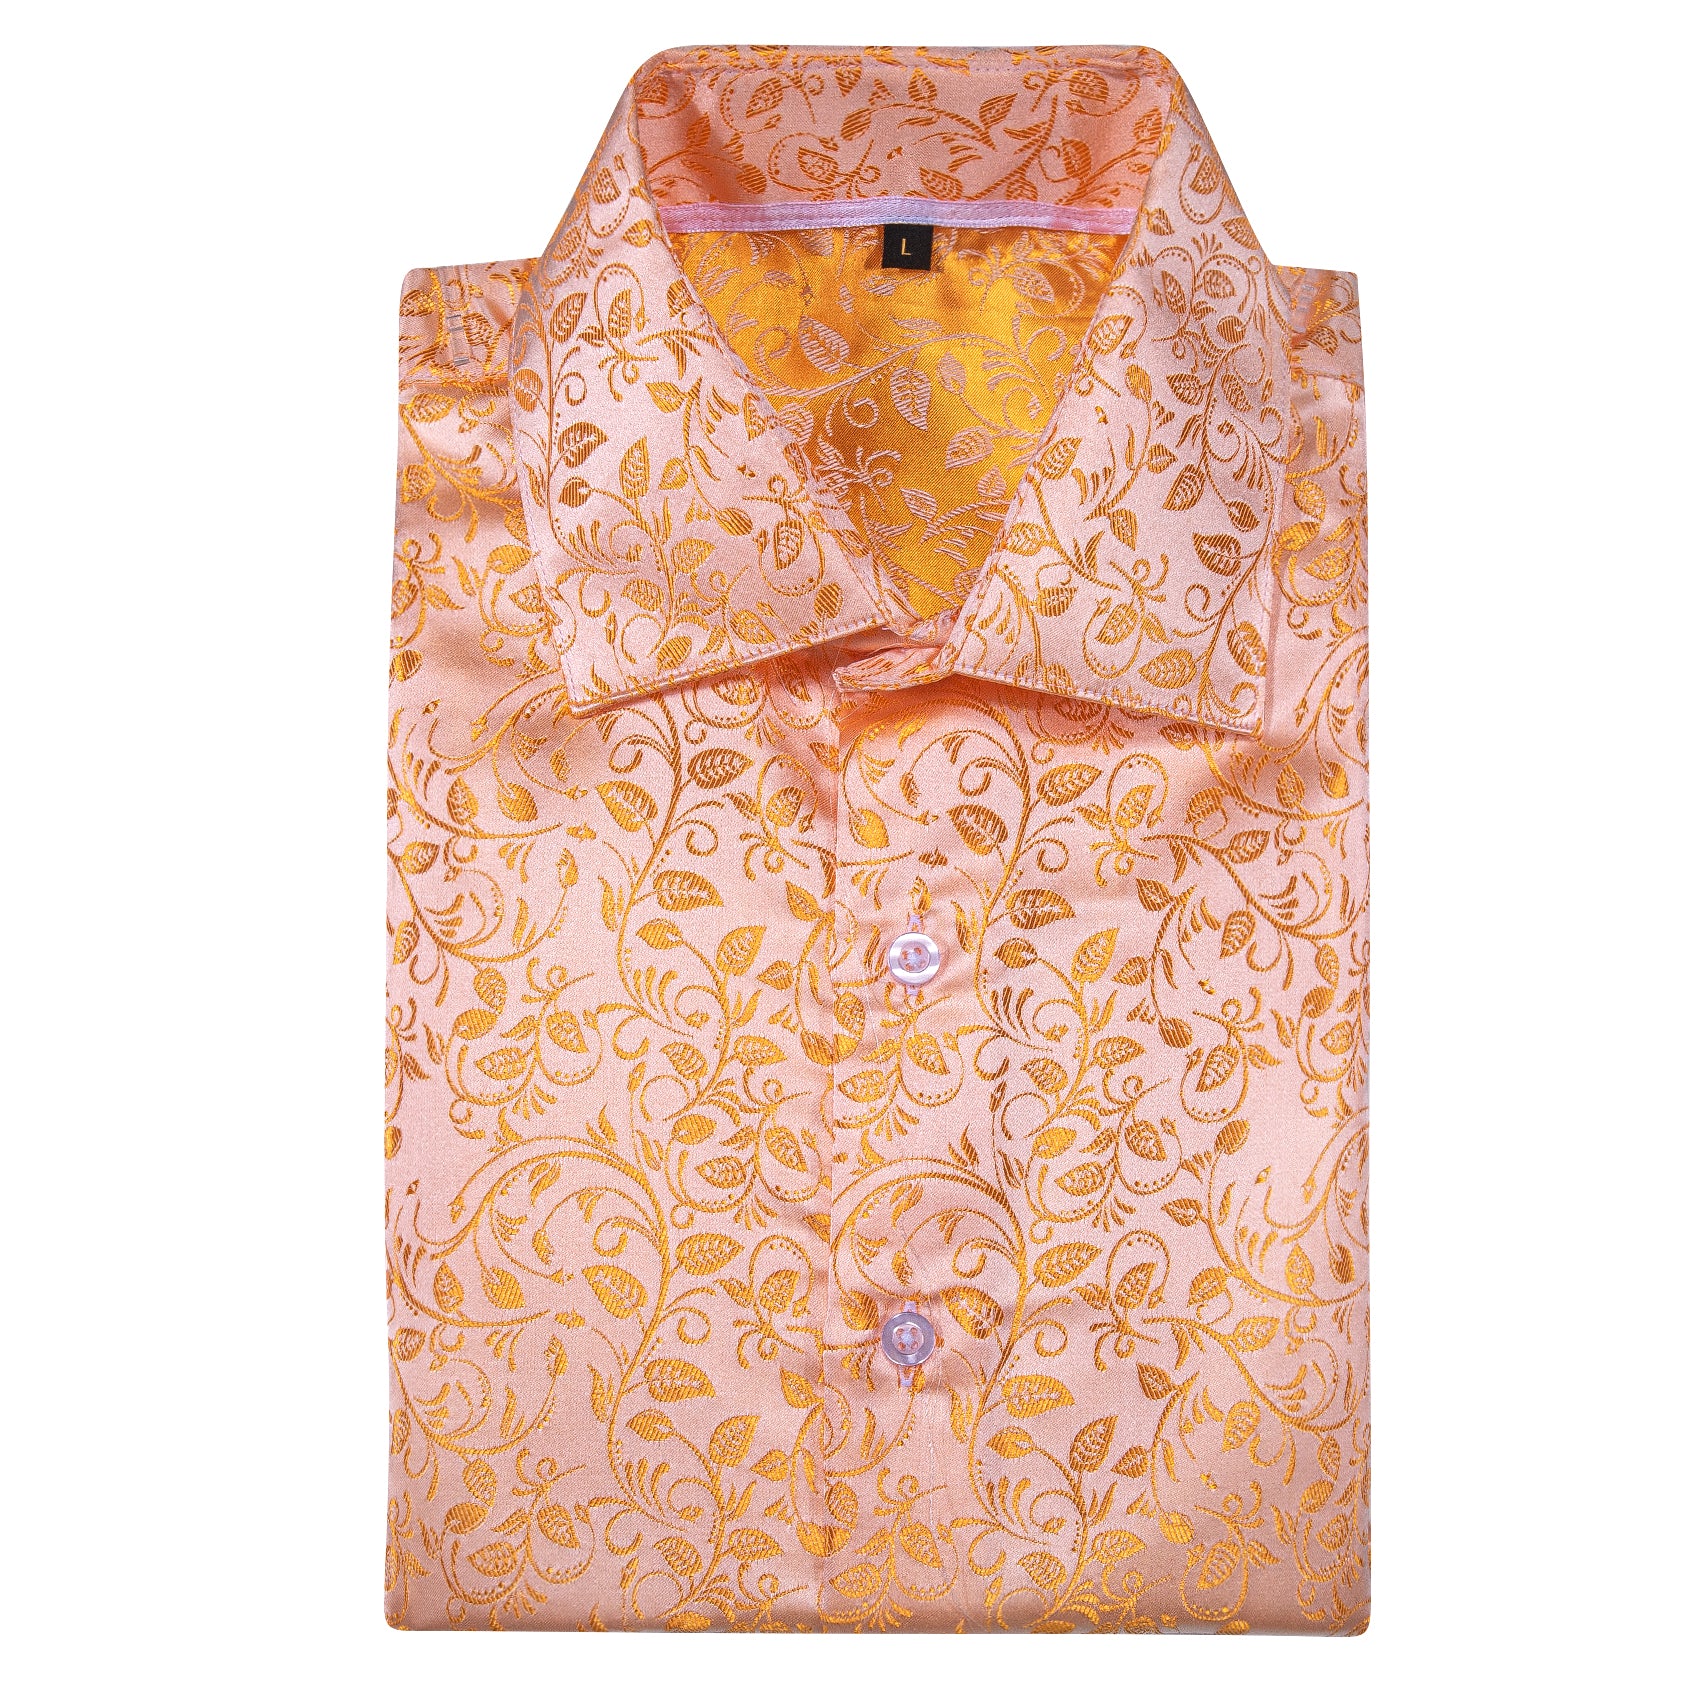 Barry.wang Orange White Leaves Floral Silk Shirt